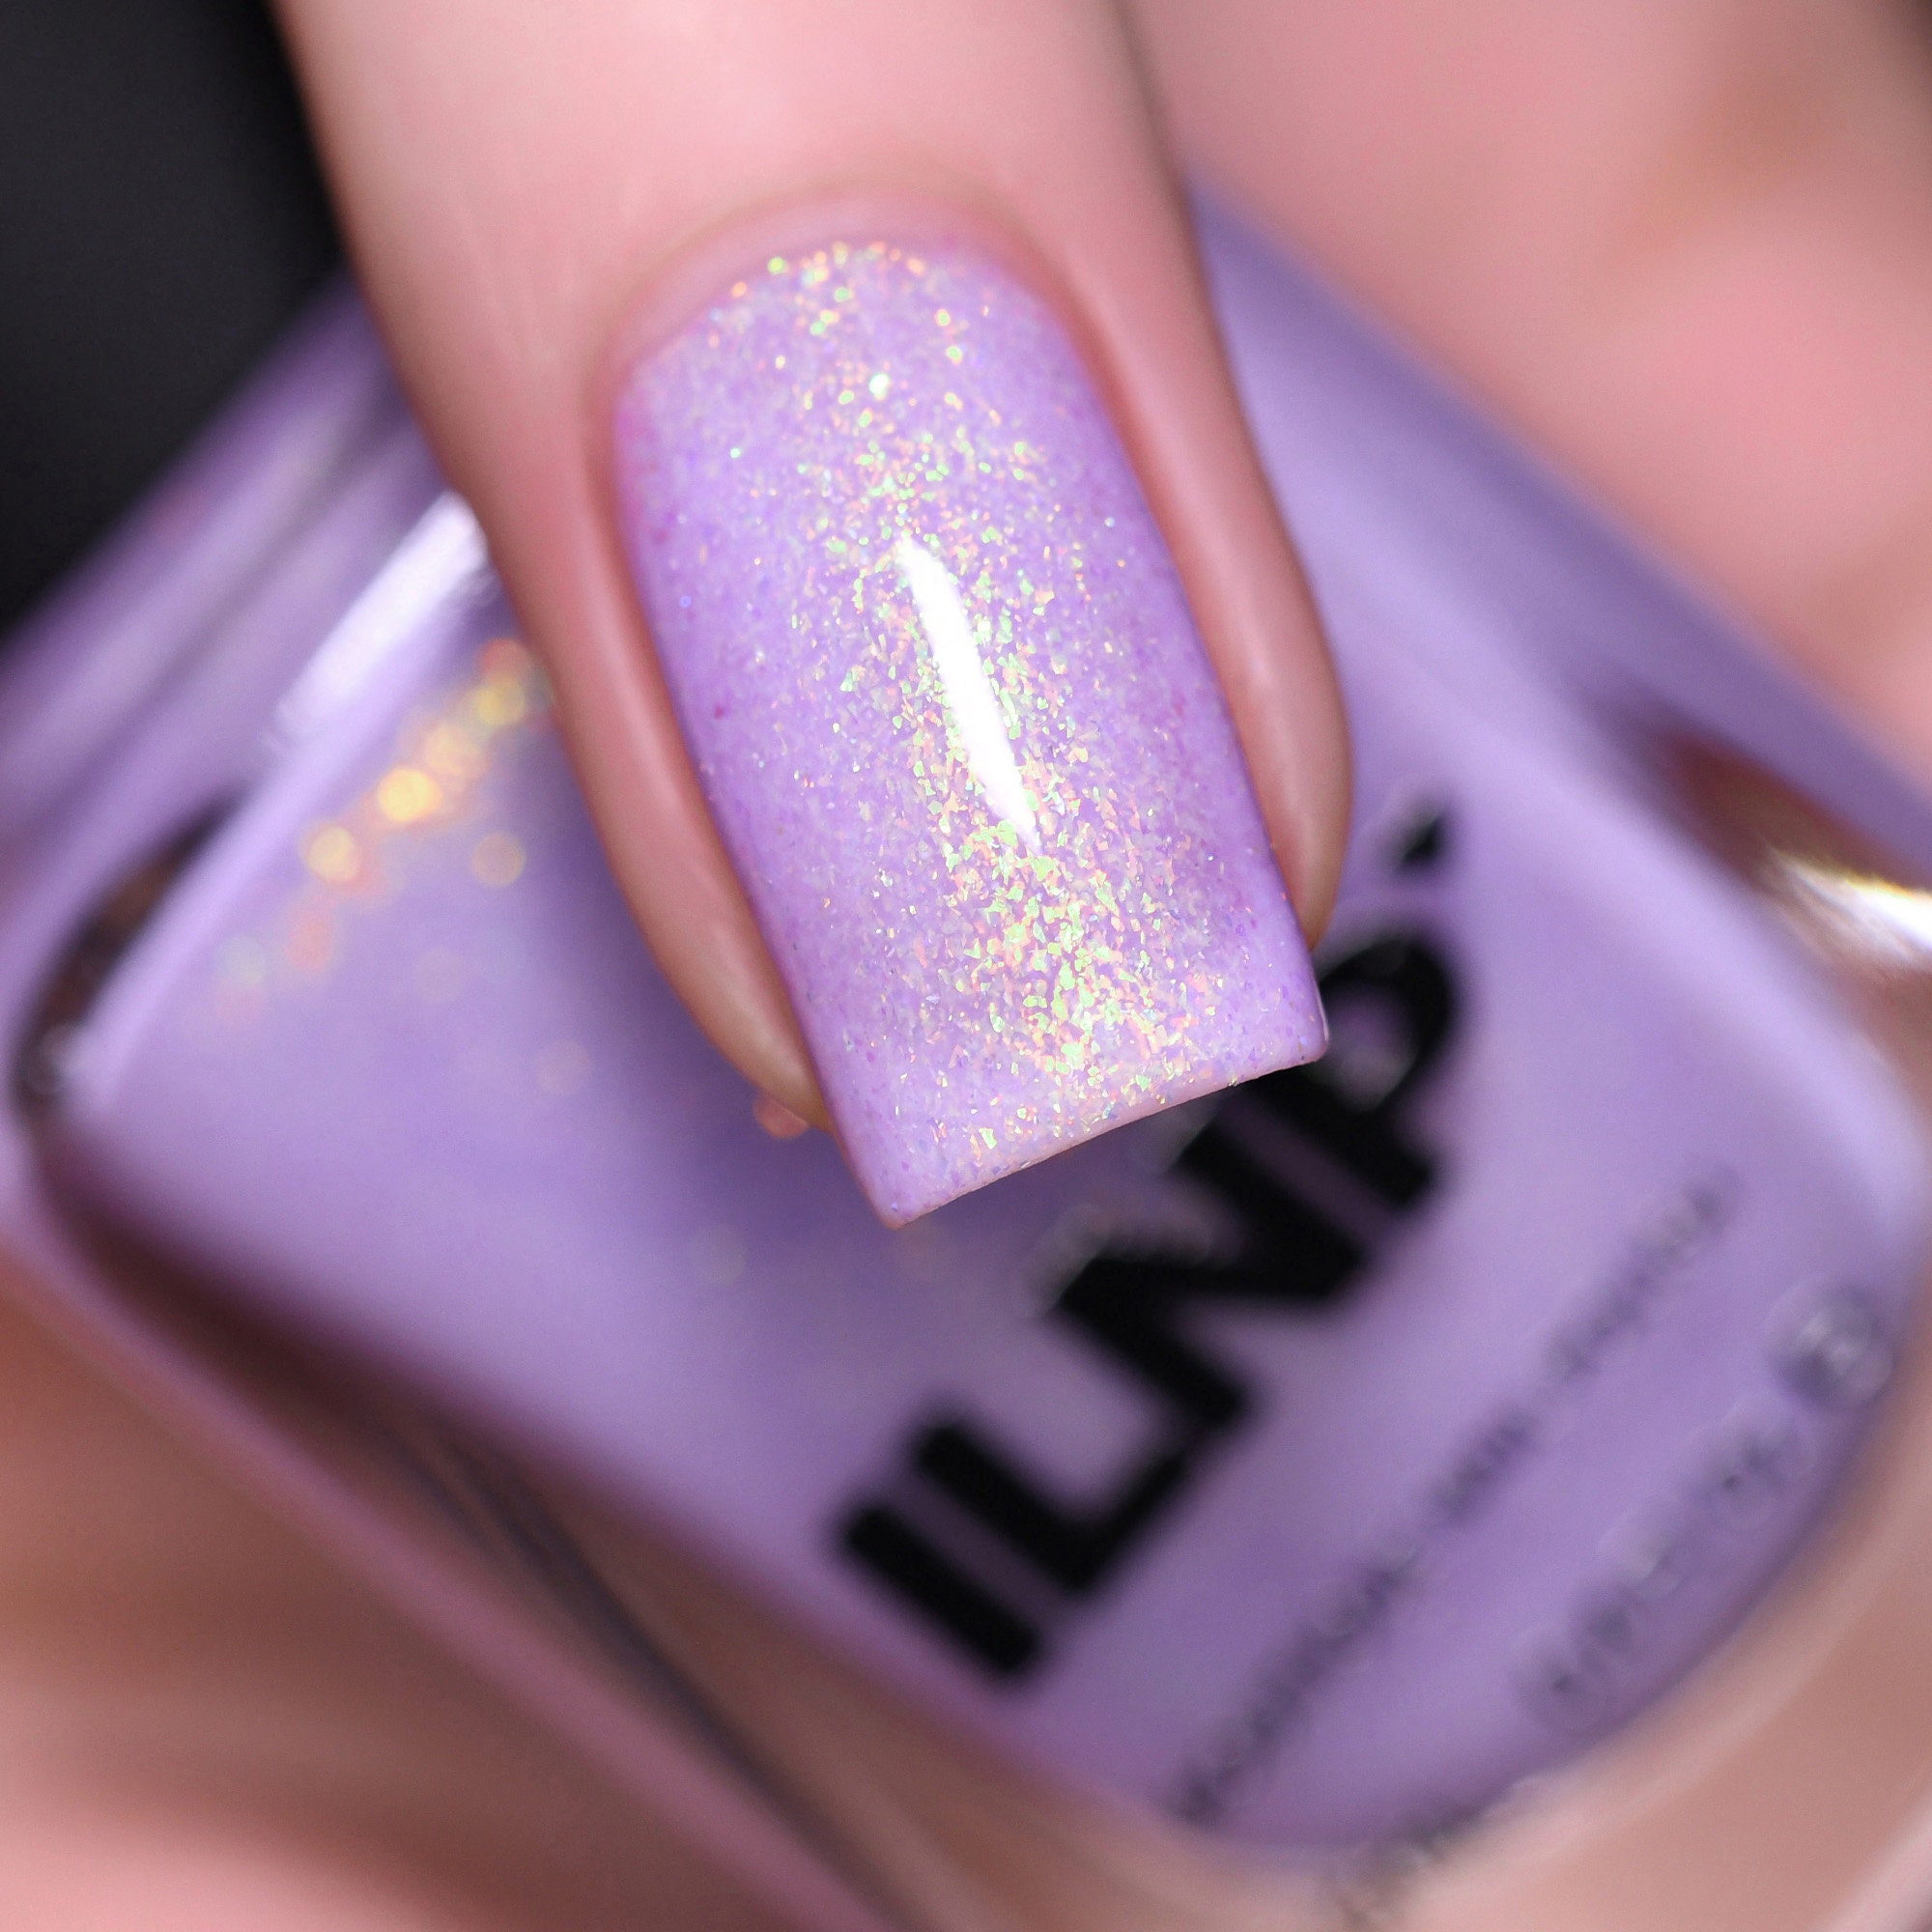 Lavender Iridescent Extra Fine Glitter Purple W/green Sparkles